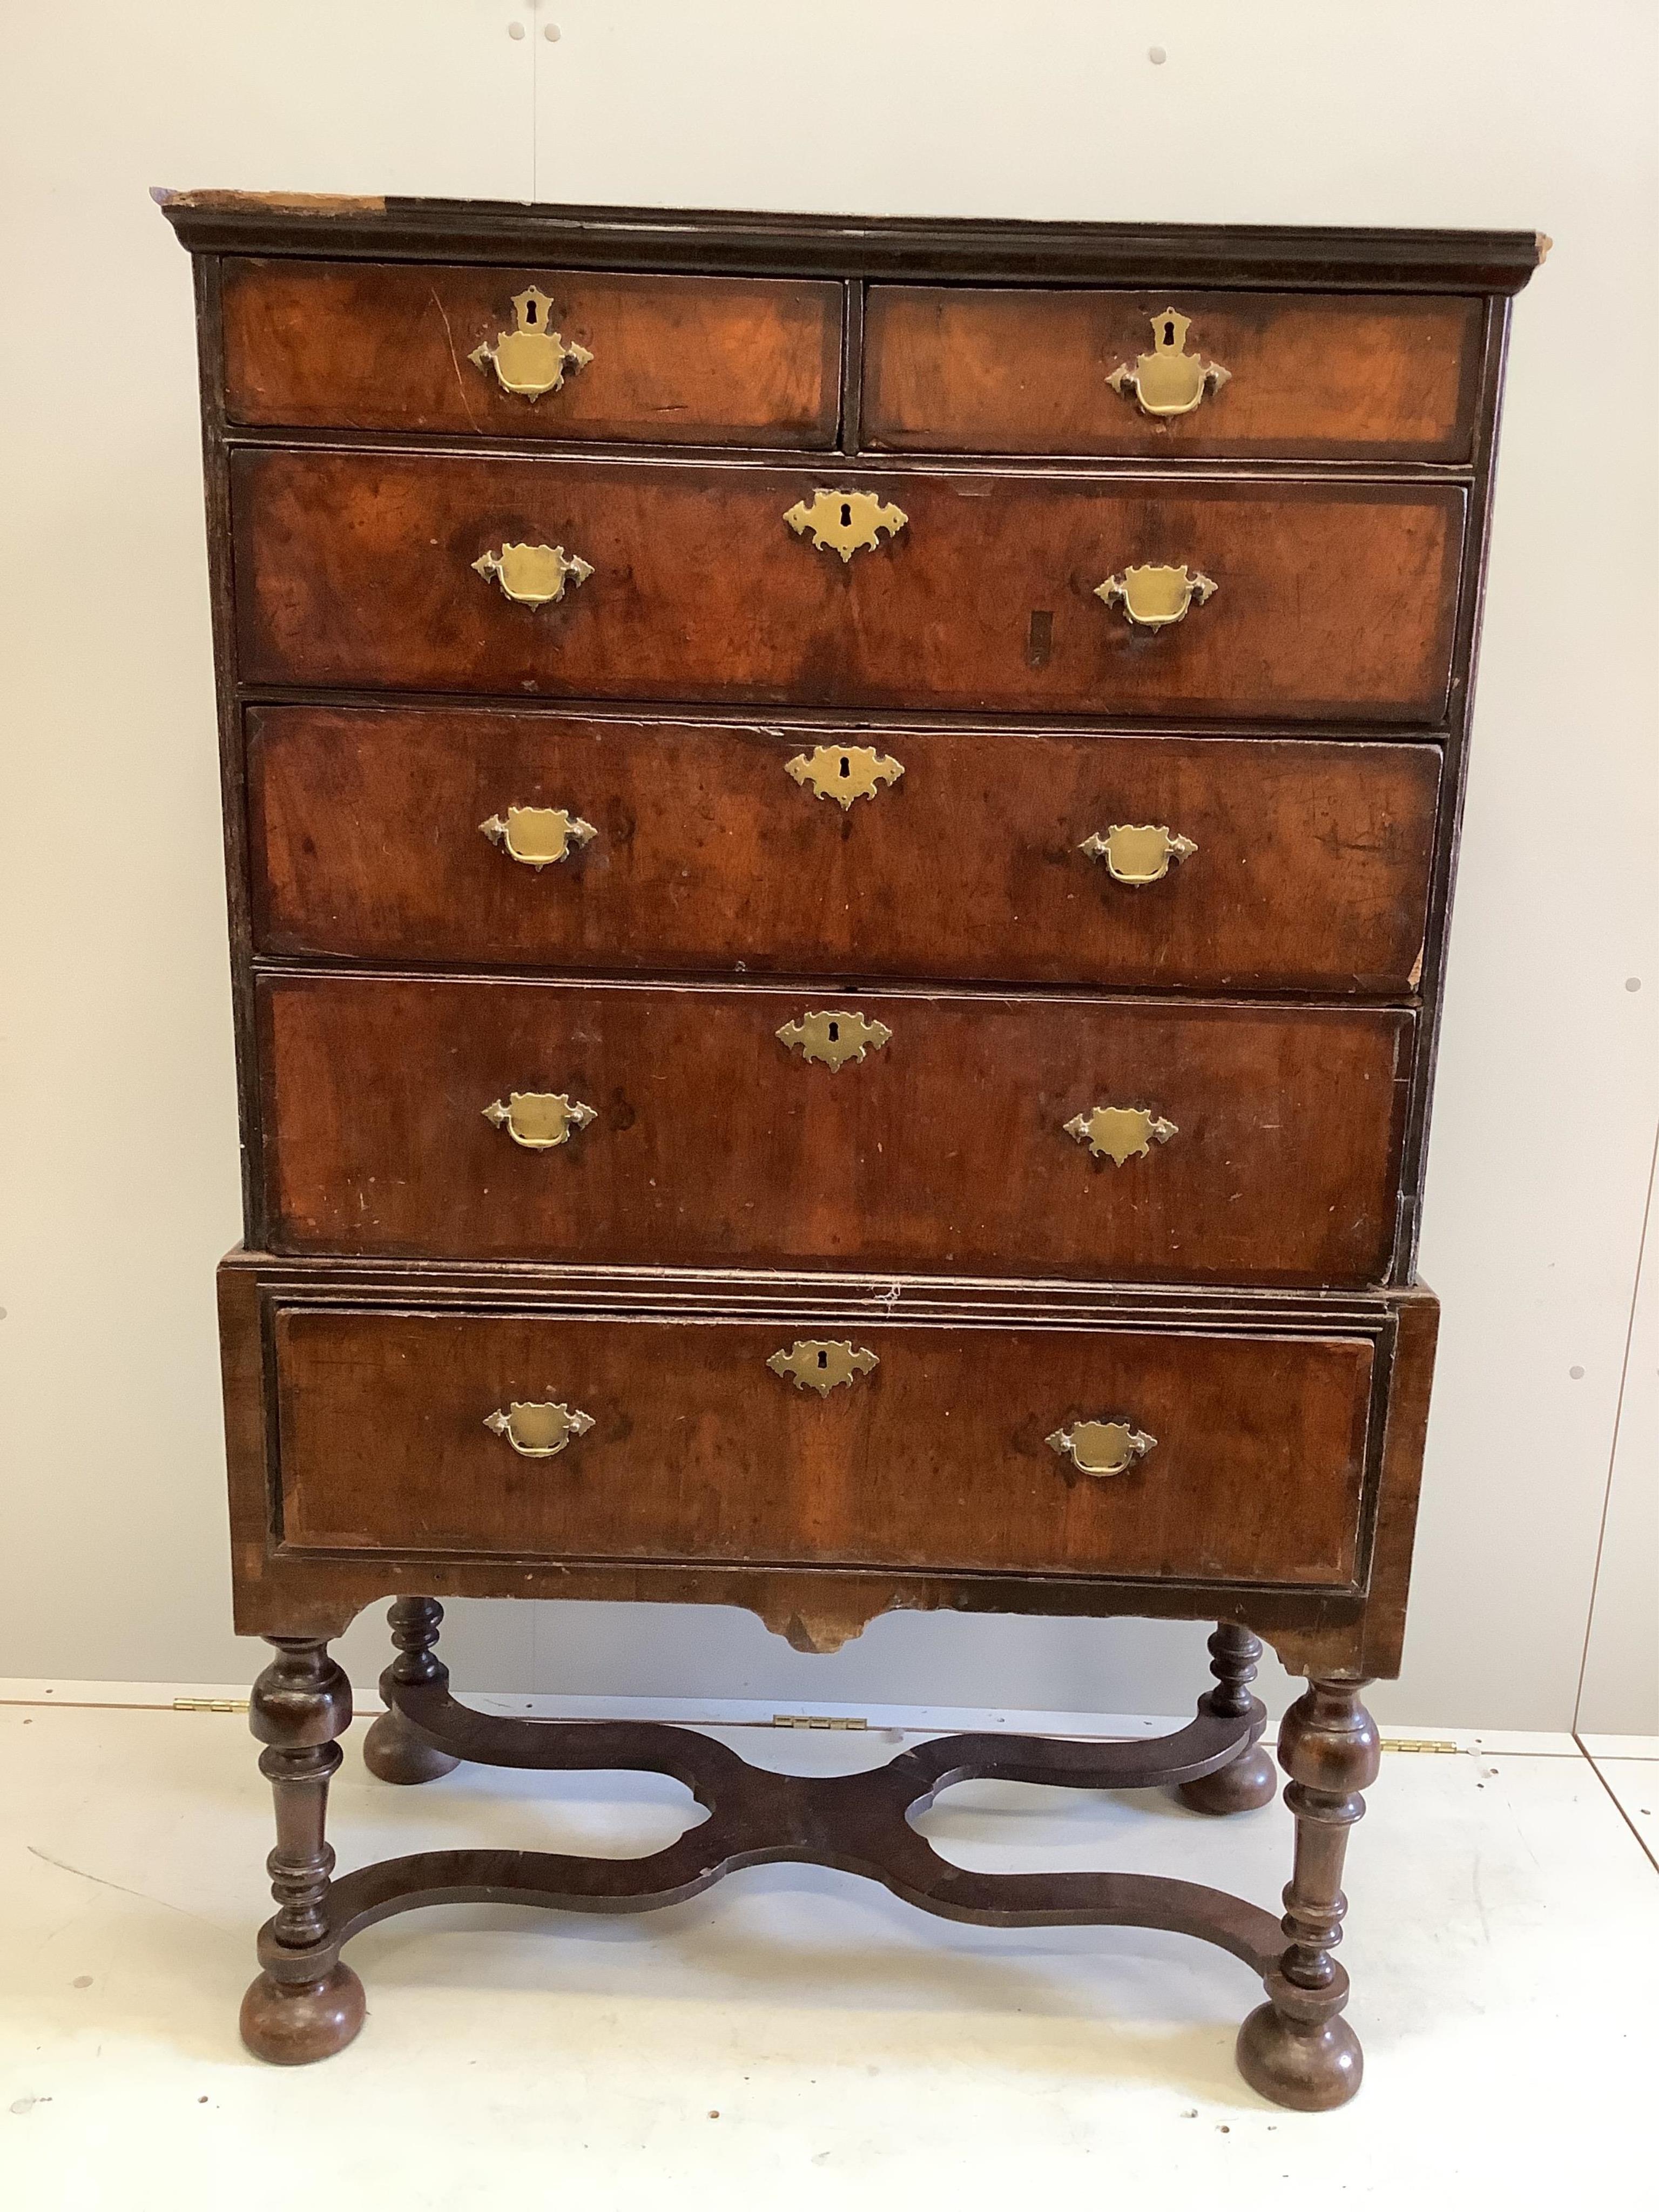 An 18th century walnut chest on stand, width 98cm, depth 50cm, height 152cm. Condition - fair